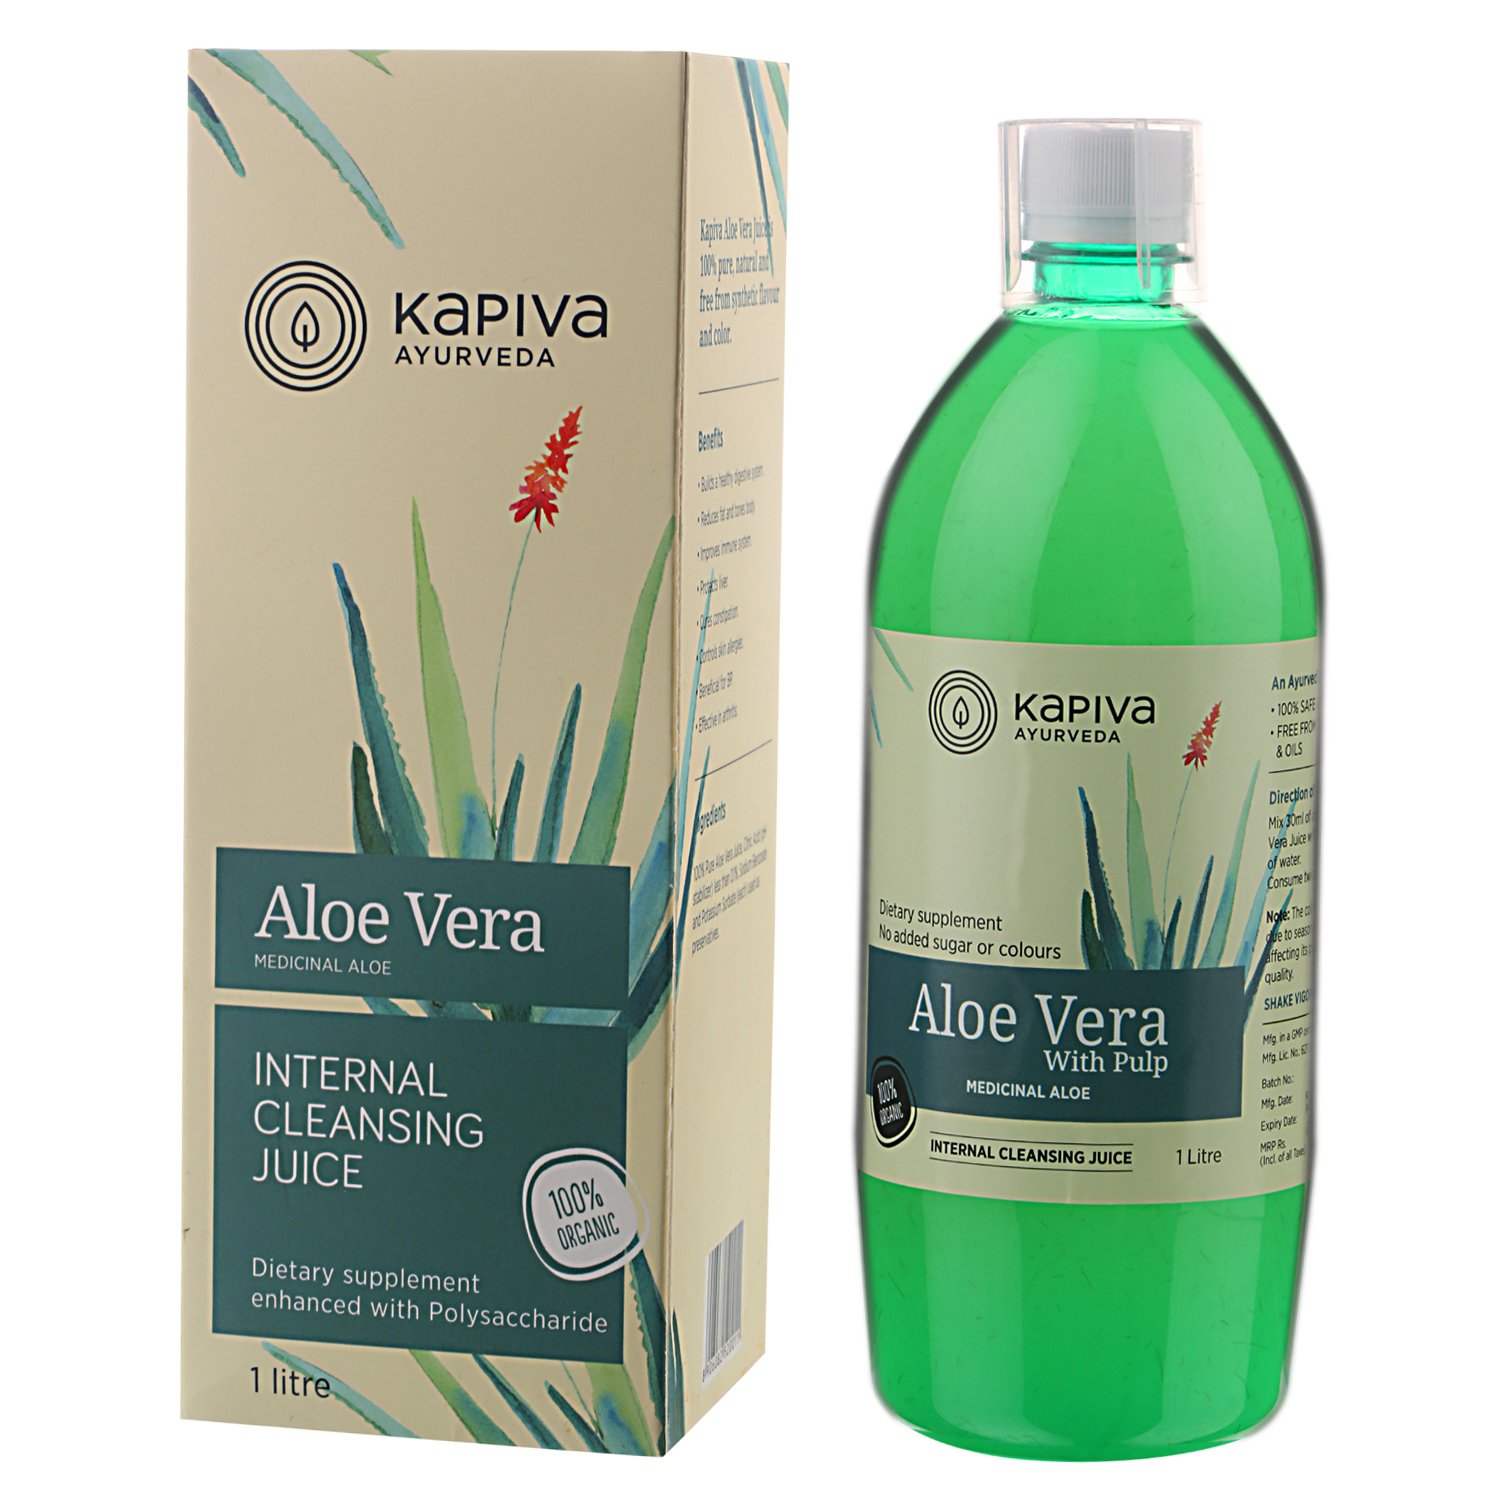 Buy Kapiva Aloe Vera Juice at Best Price Online